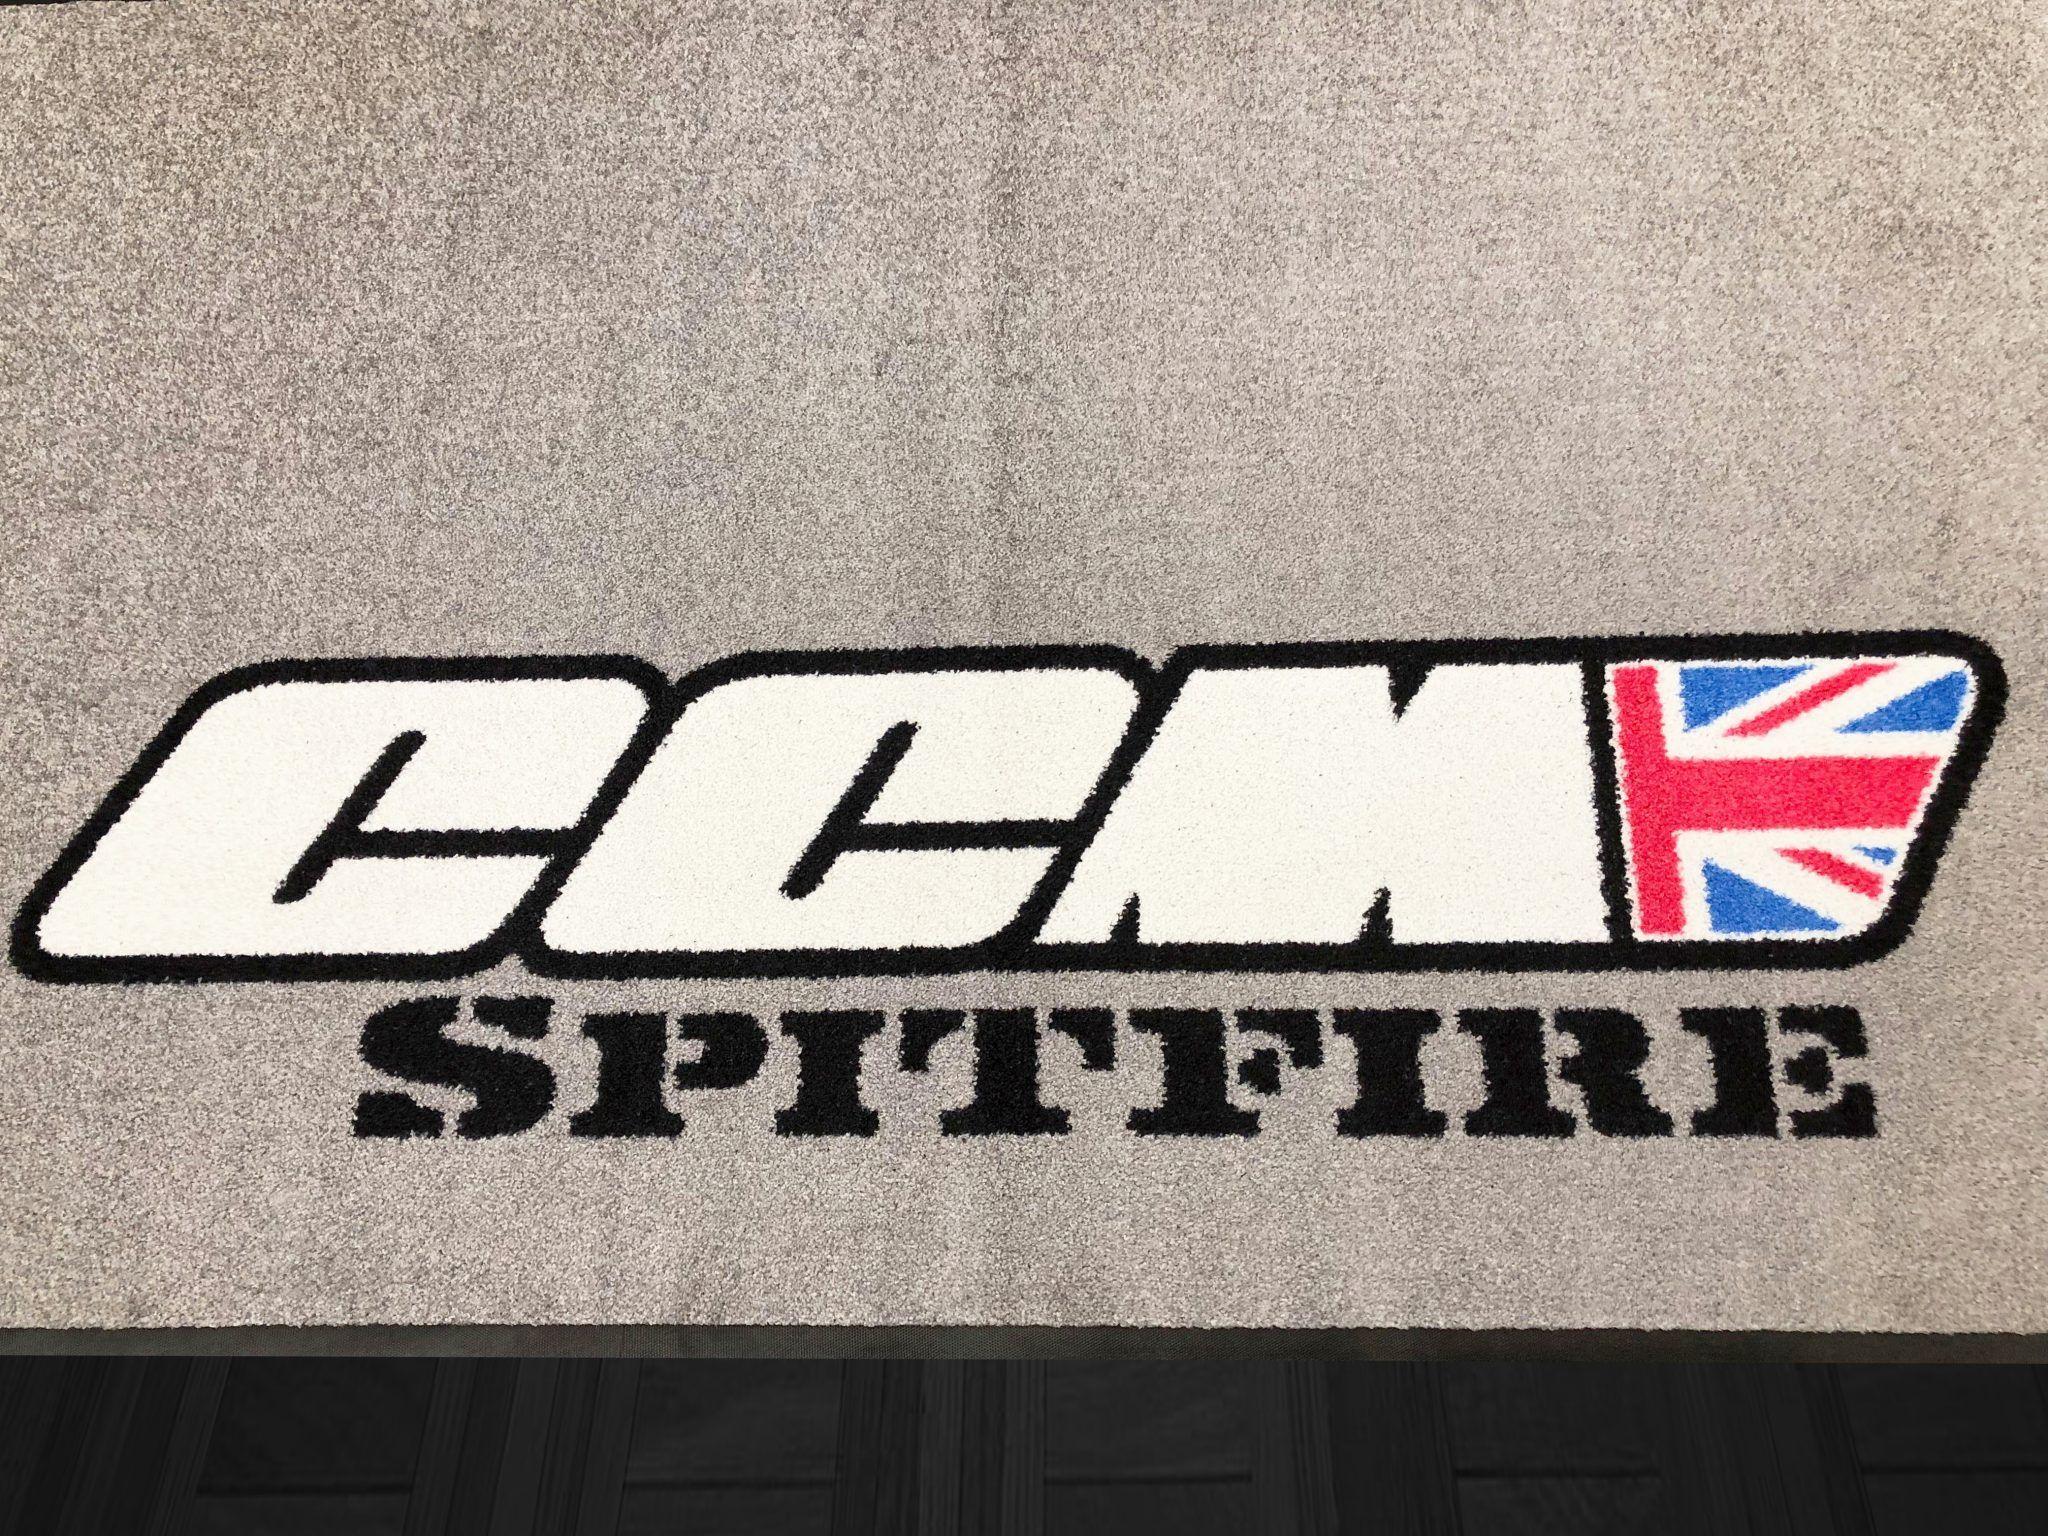 CCM Logo - CCM Motorcycles | CCM Official CCM Spitfire Motorcycle Rug/Workshop ...